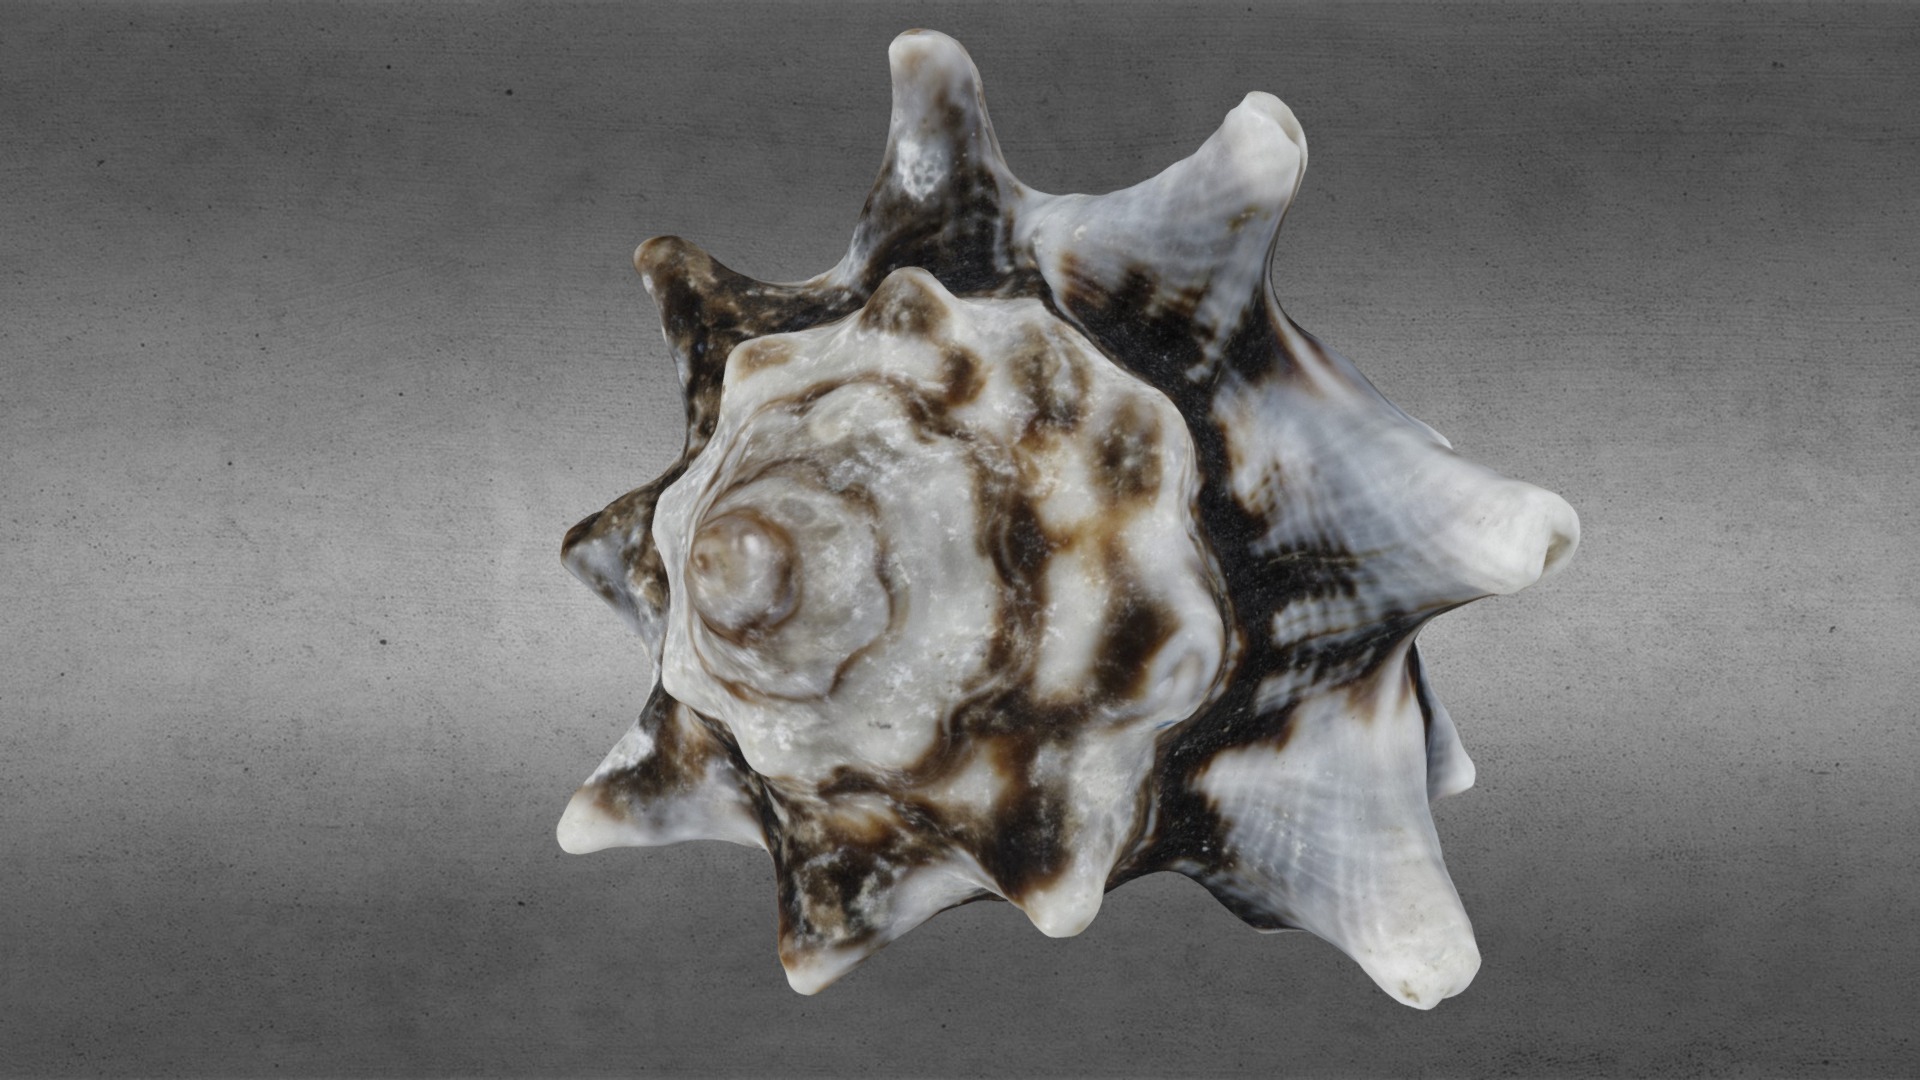 3D model snailMakro – 001 - This is a 3D model of the snailMakro - 001. The 3D model is about a skull of an animal.